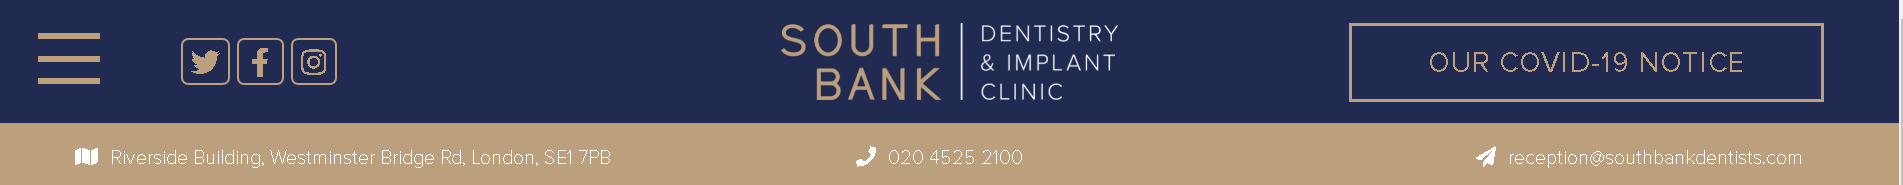 South Bank Dentistry and Implant Clinic - Dr. Caleb Yang